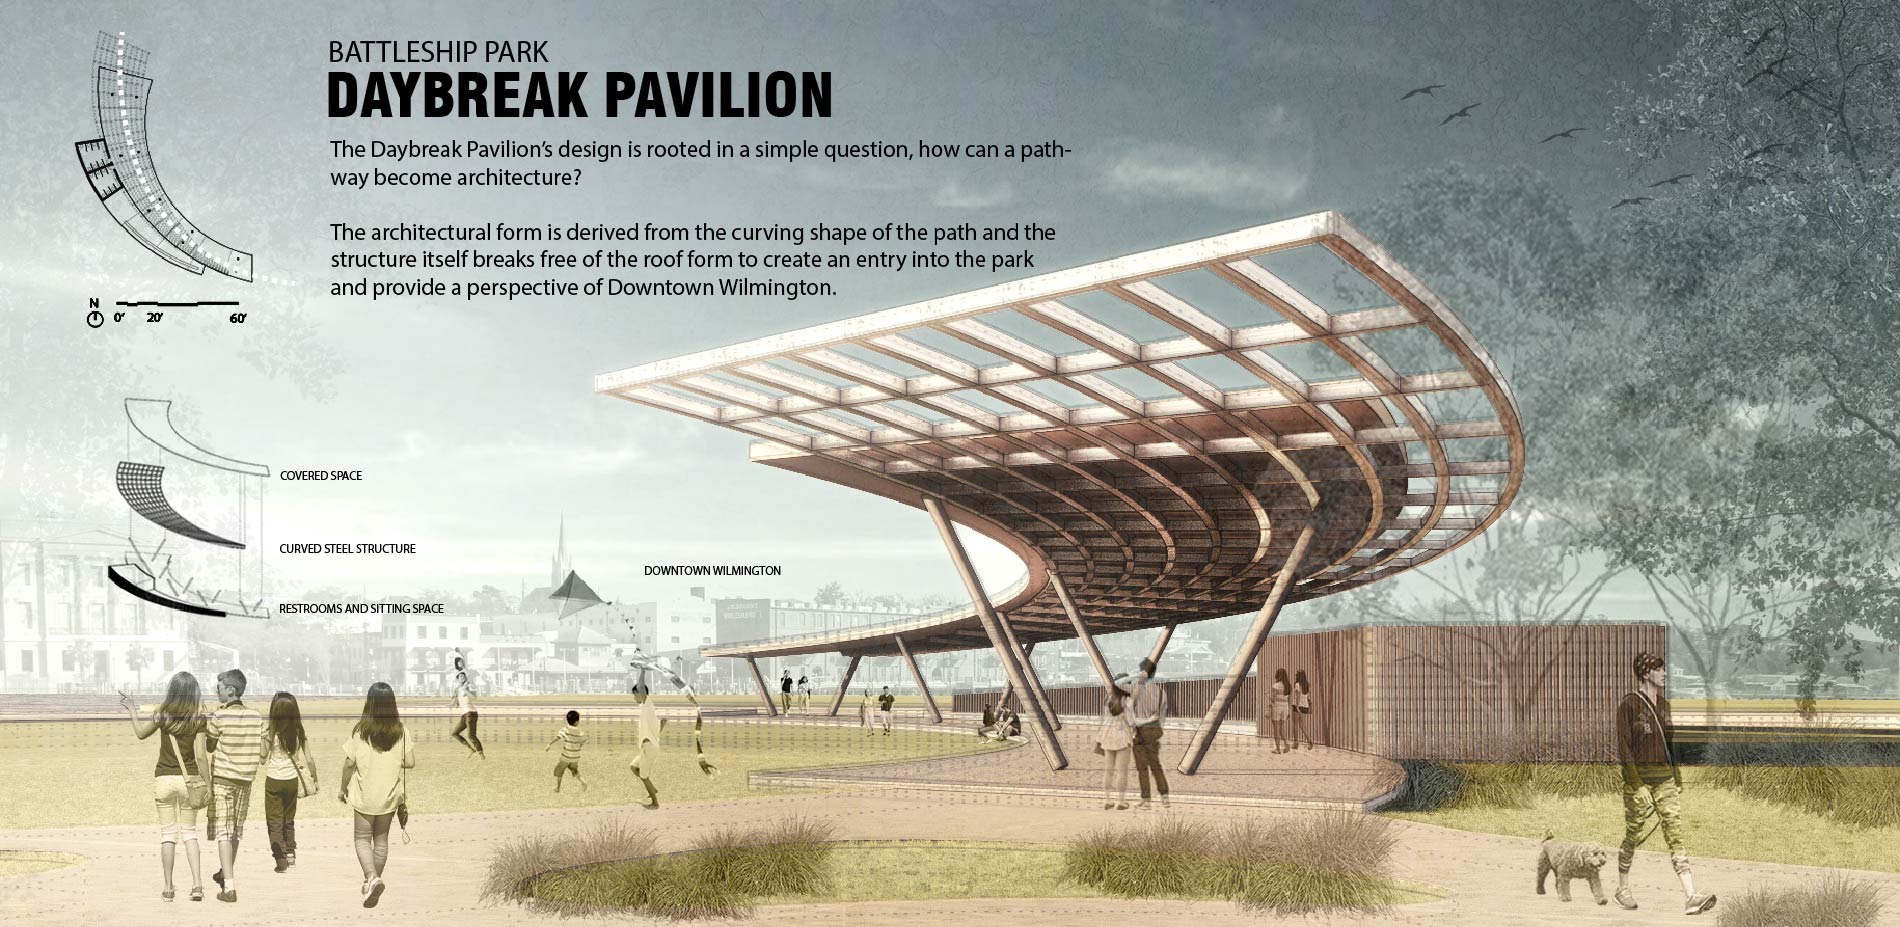 Path yet Architecture: The Daybreak Pavilion